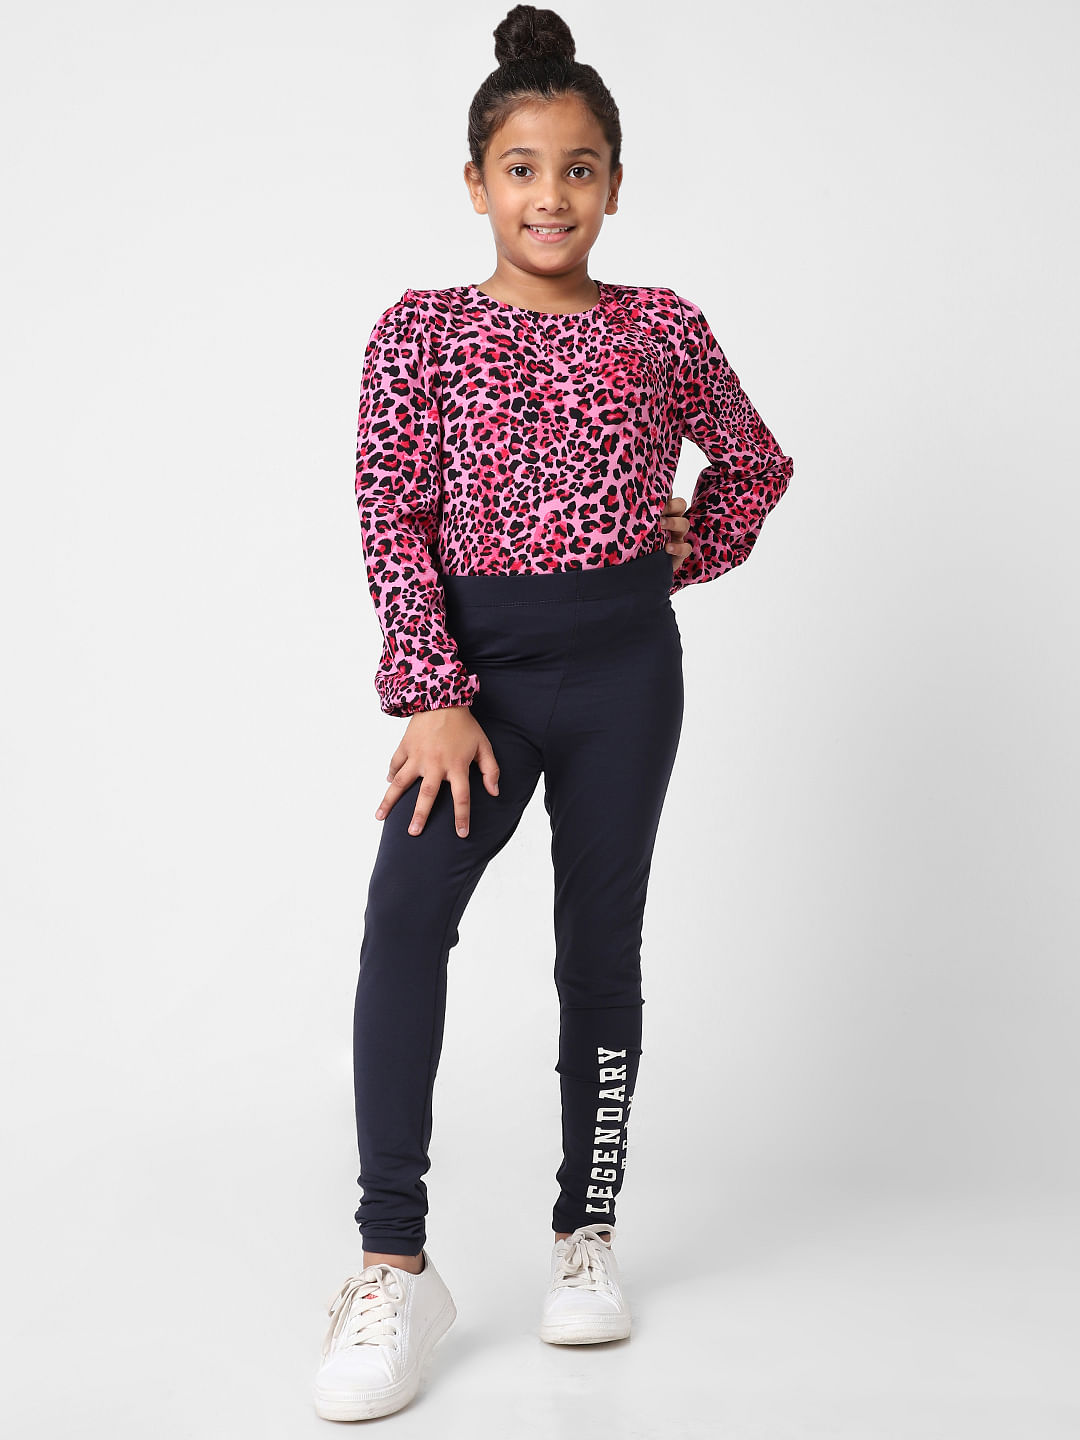 Amazon.com: Aslsiy Girls Leggings Pink Black Glitter Toddler Stretch Tights  Pants Full Length Yoga Dance Pants 4T: Clothing, Shoes & Jewelry